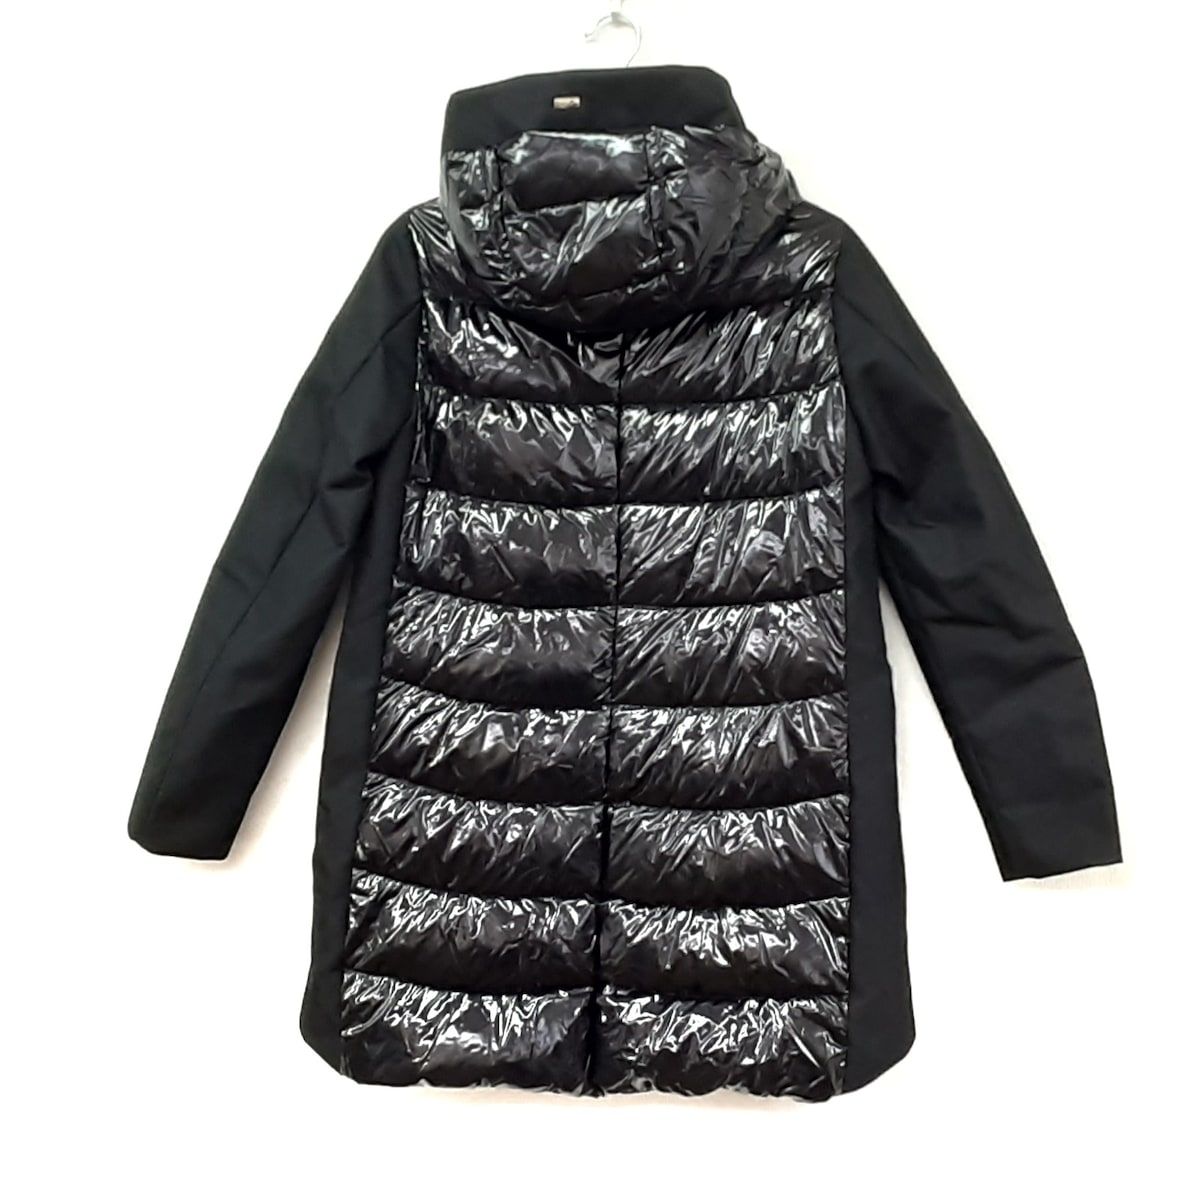 HERNO(ヘルノ) ダウンジャケット サイズ38 S レディース美品 - 黒 長袖